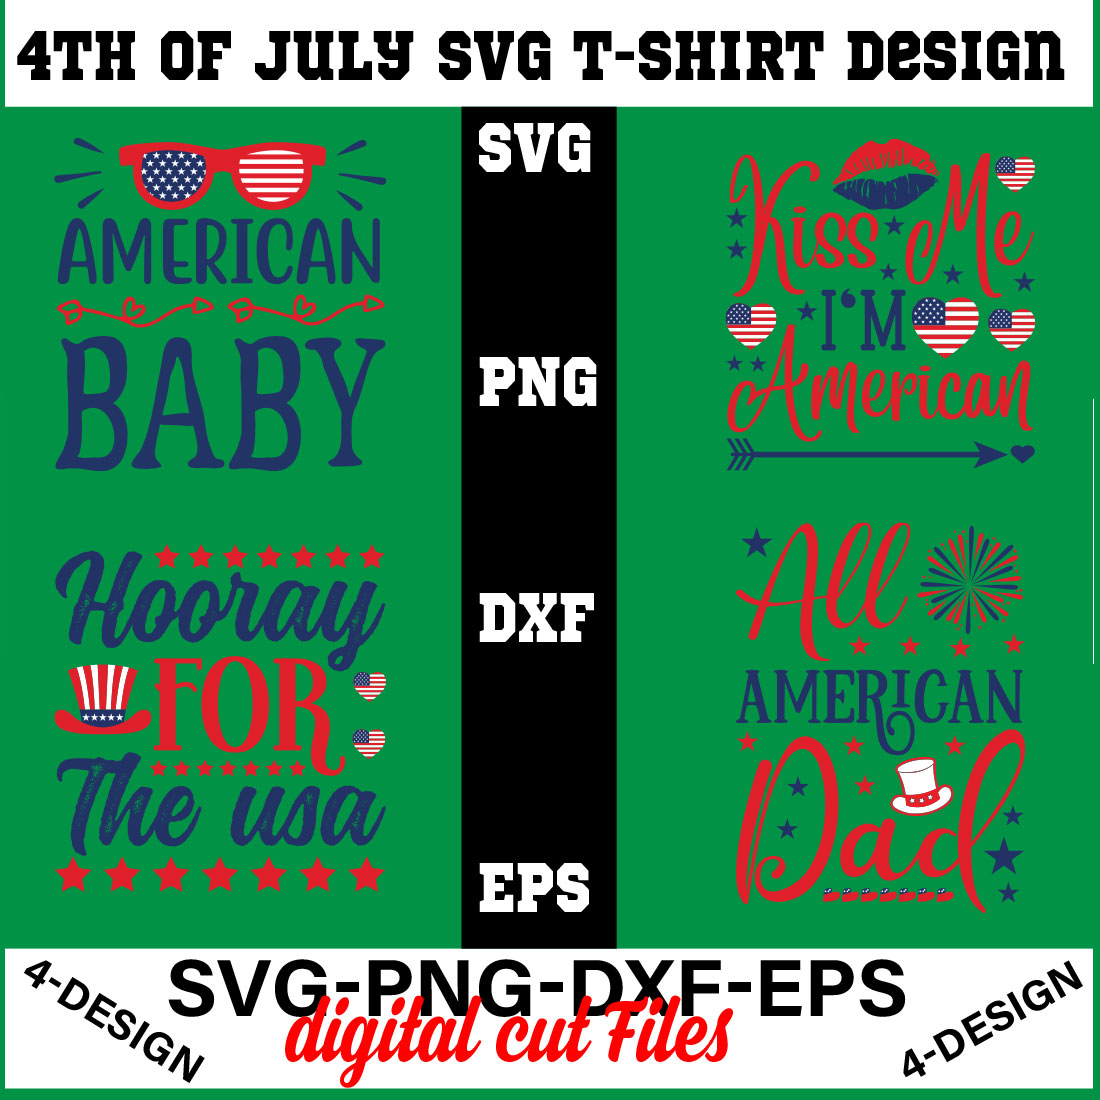 4th of July SVG Bundle, July 4th SVG, Fourth of July svg, America svg Volume-04 cover image.